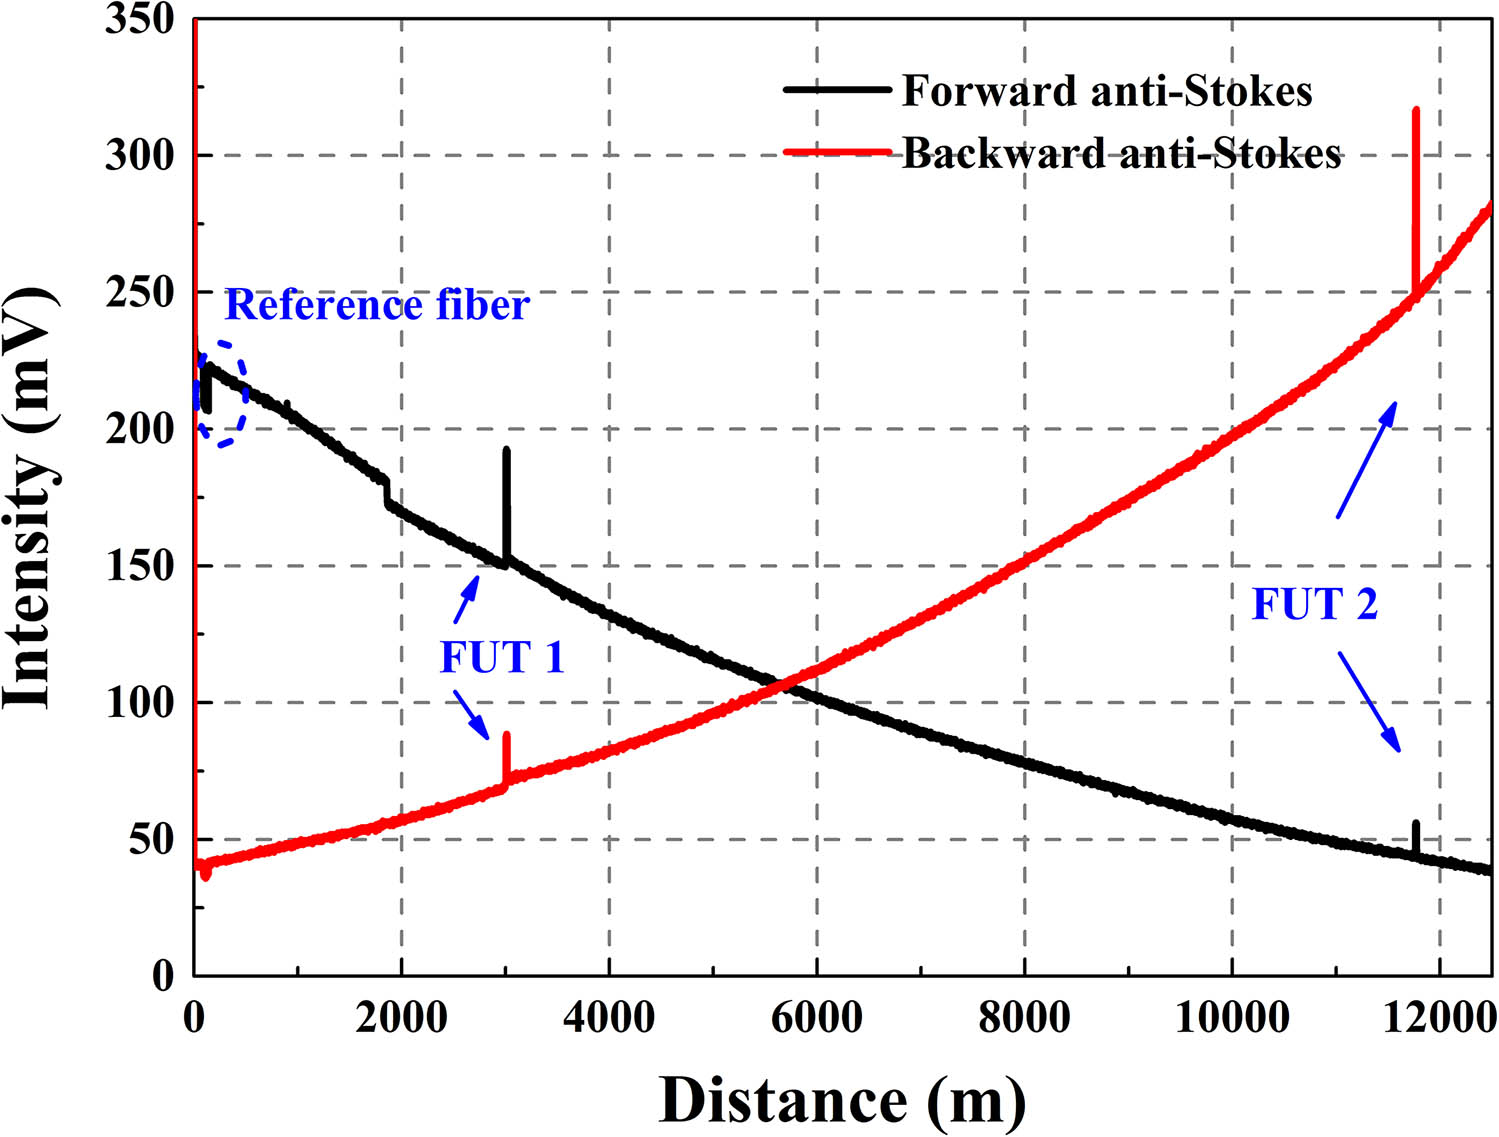 Anti-Stokes backscattering signal intensity in both forward and backward directions.